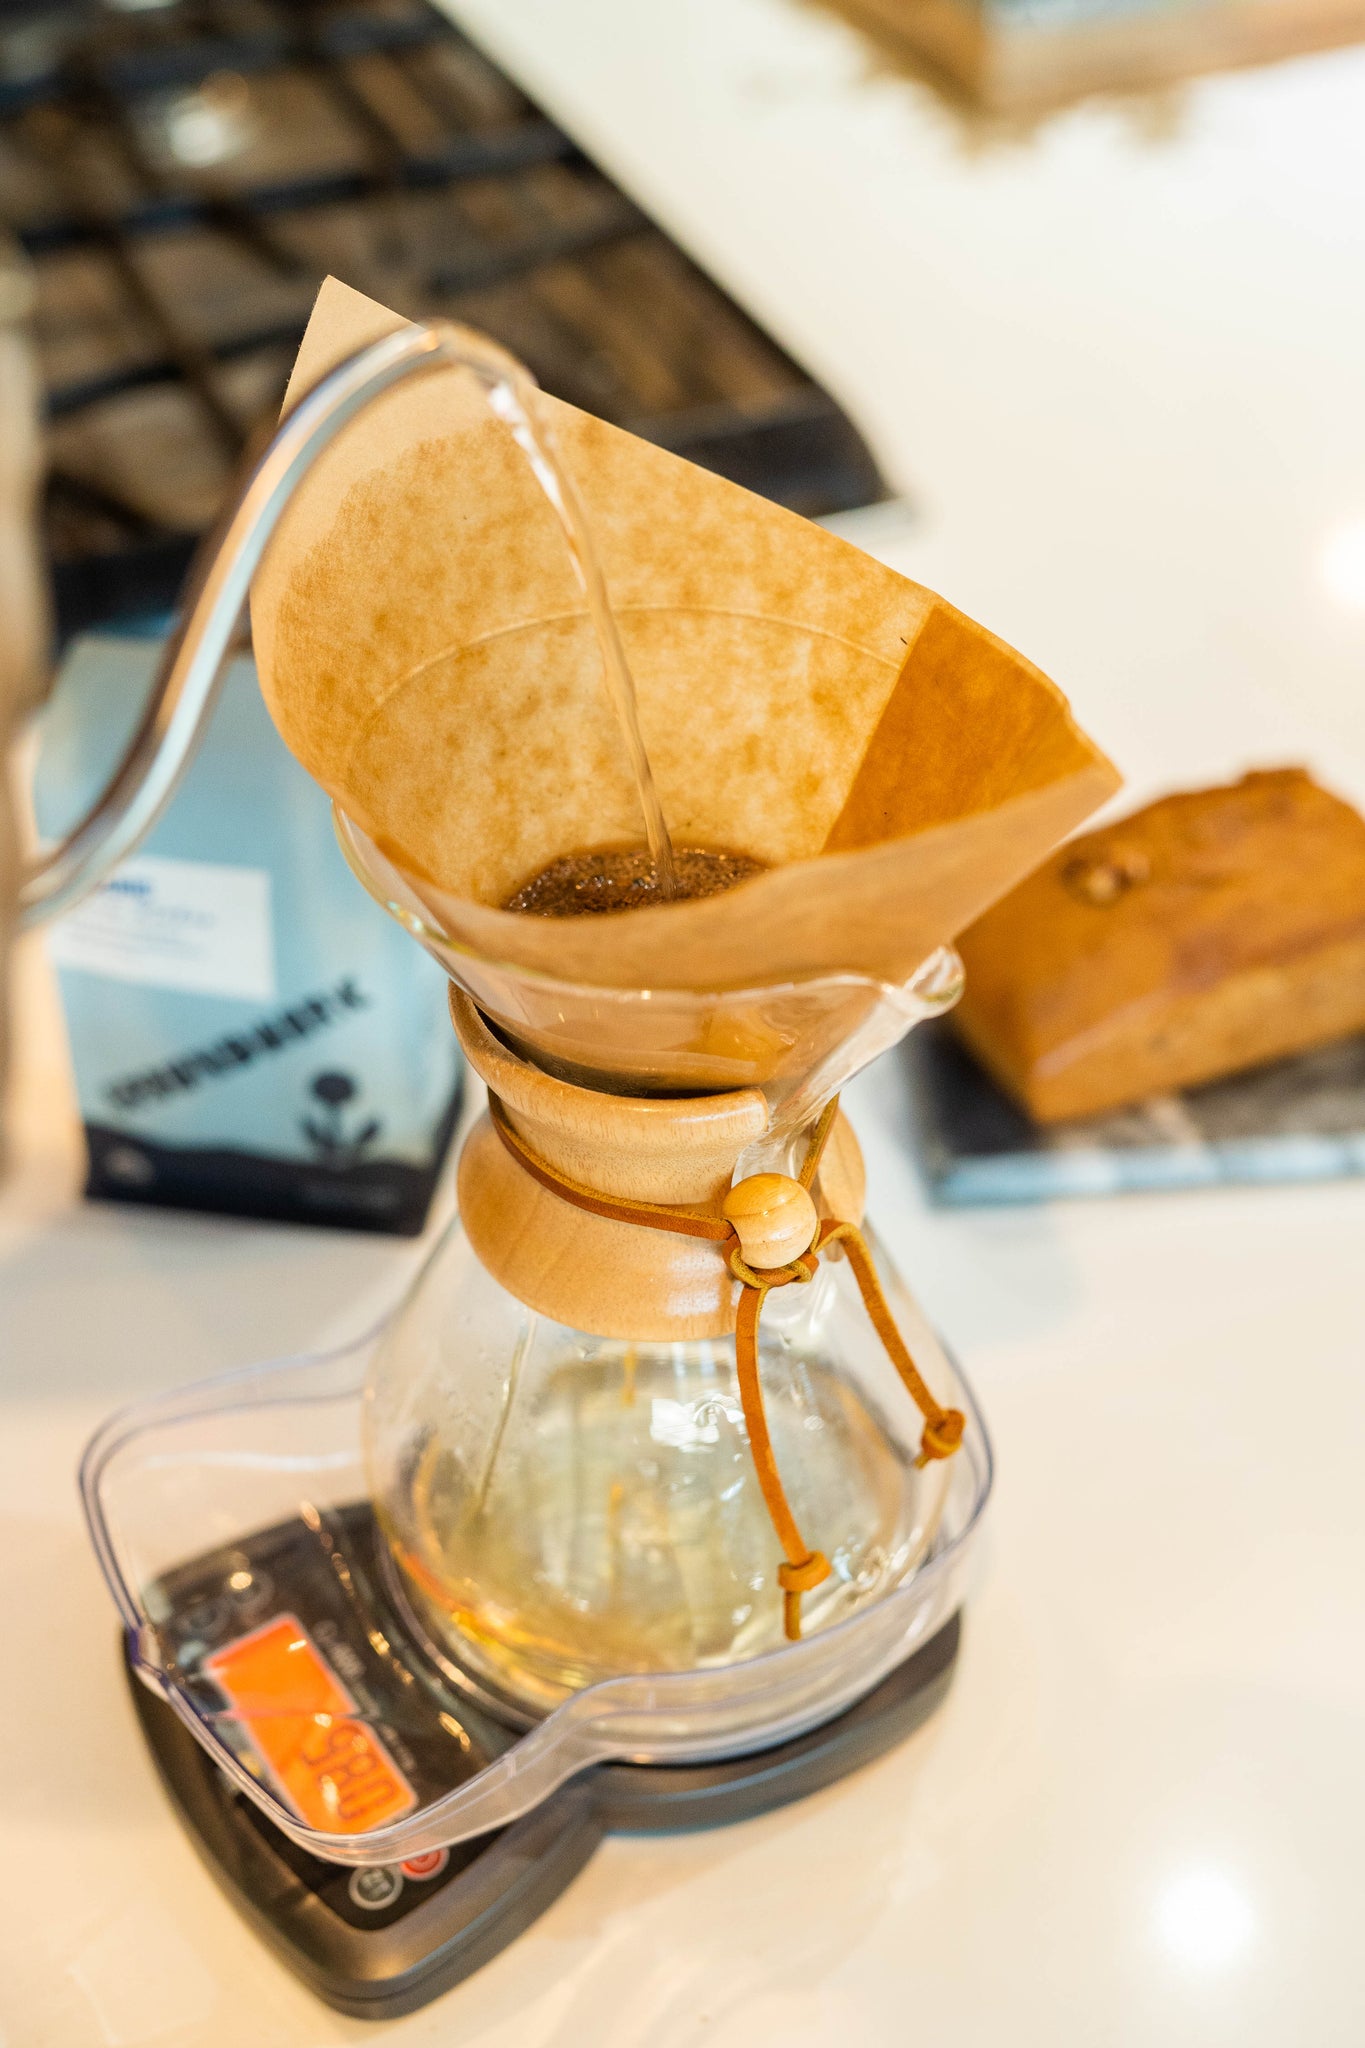 Chemex 8 Cup Coffee Maker